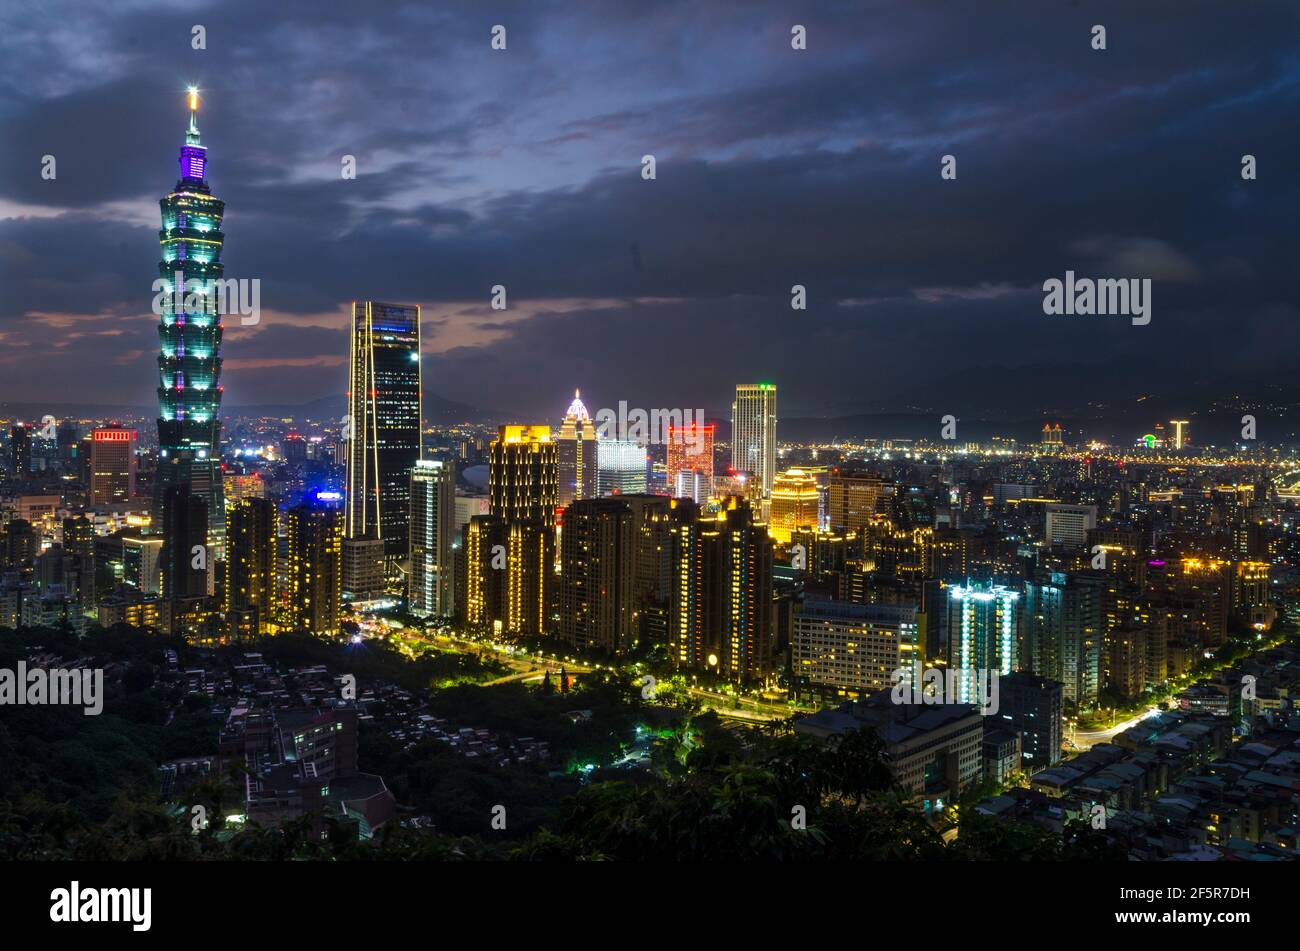 Notte giù città illuminata da luci colorate. Foto Stock